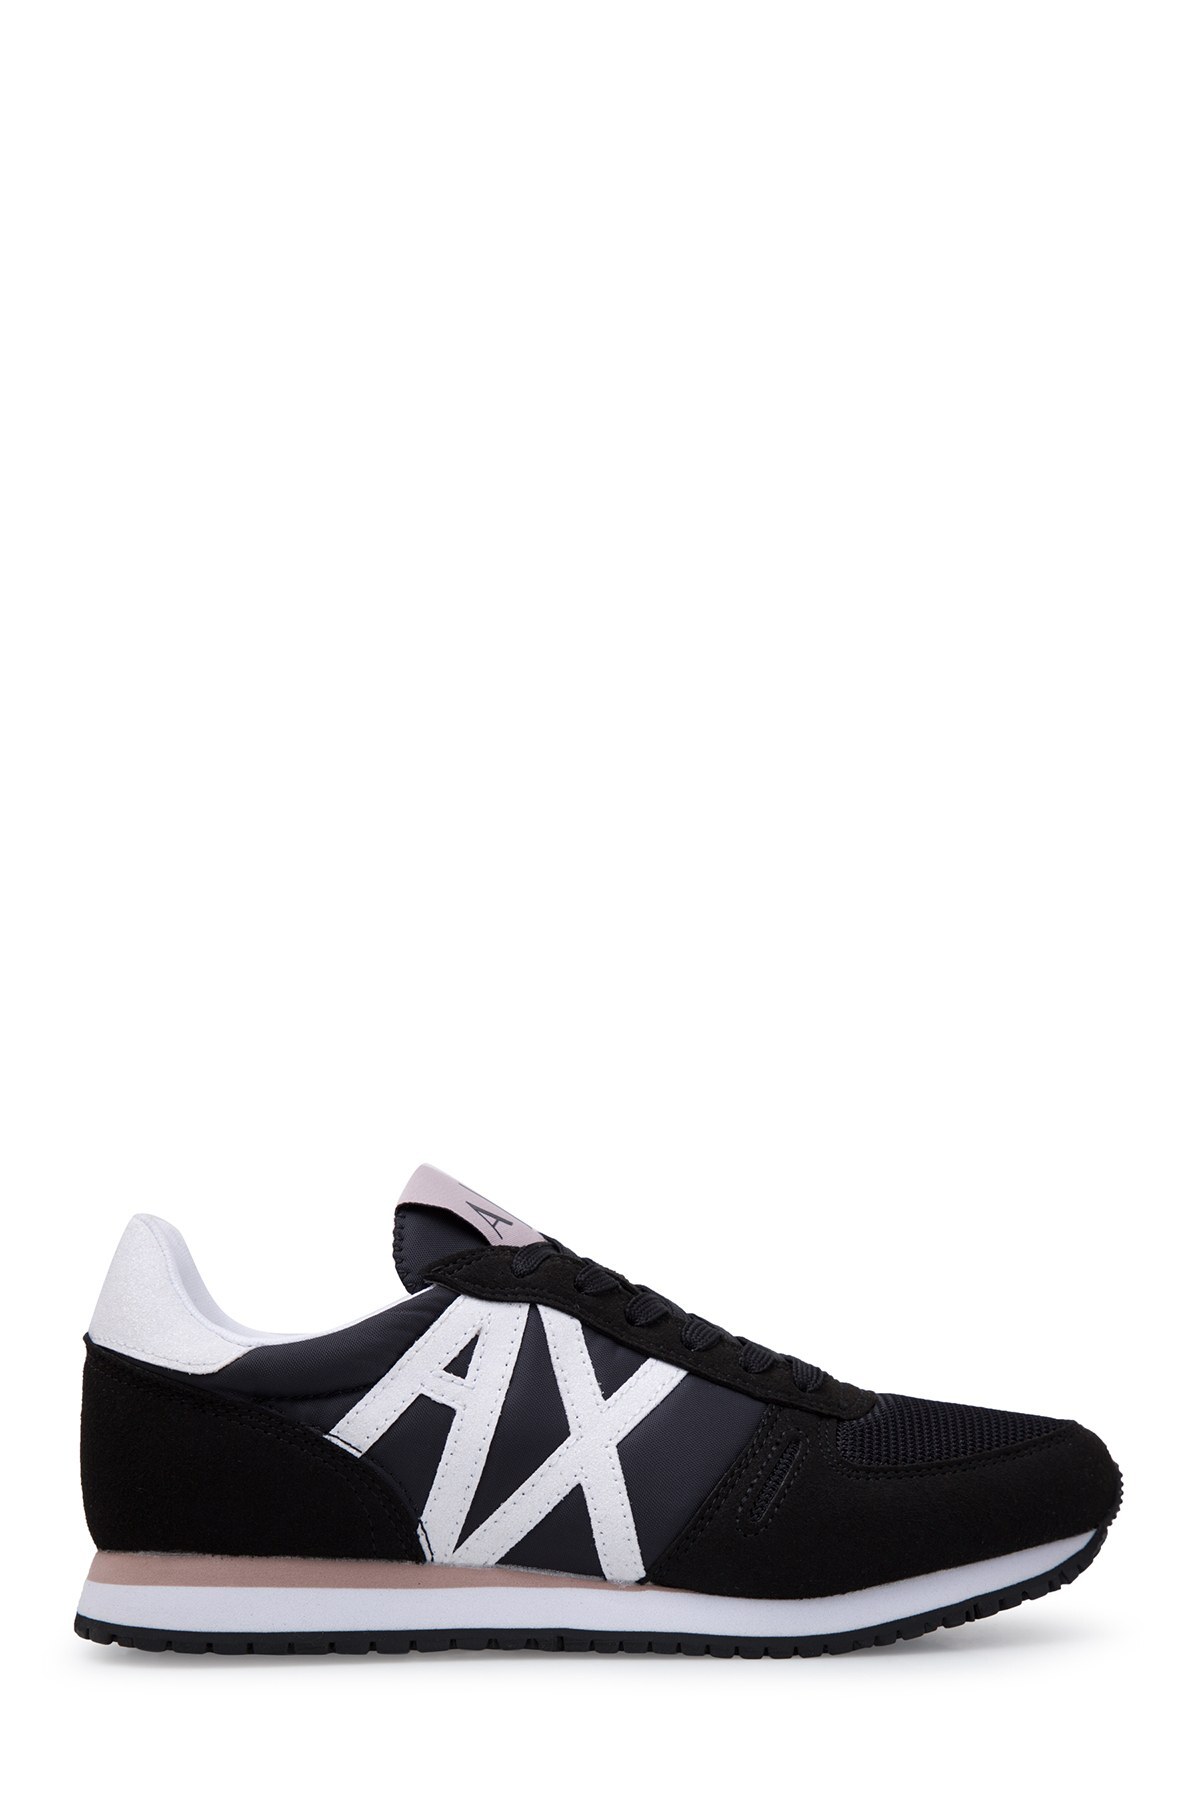 Armani Exchange Kadın Ayakkabı XDX031 XV308 A120 SİYAH